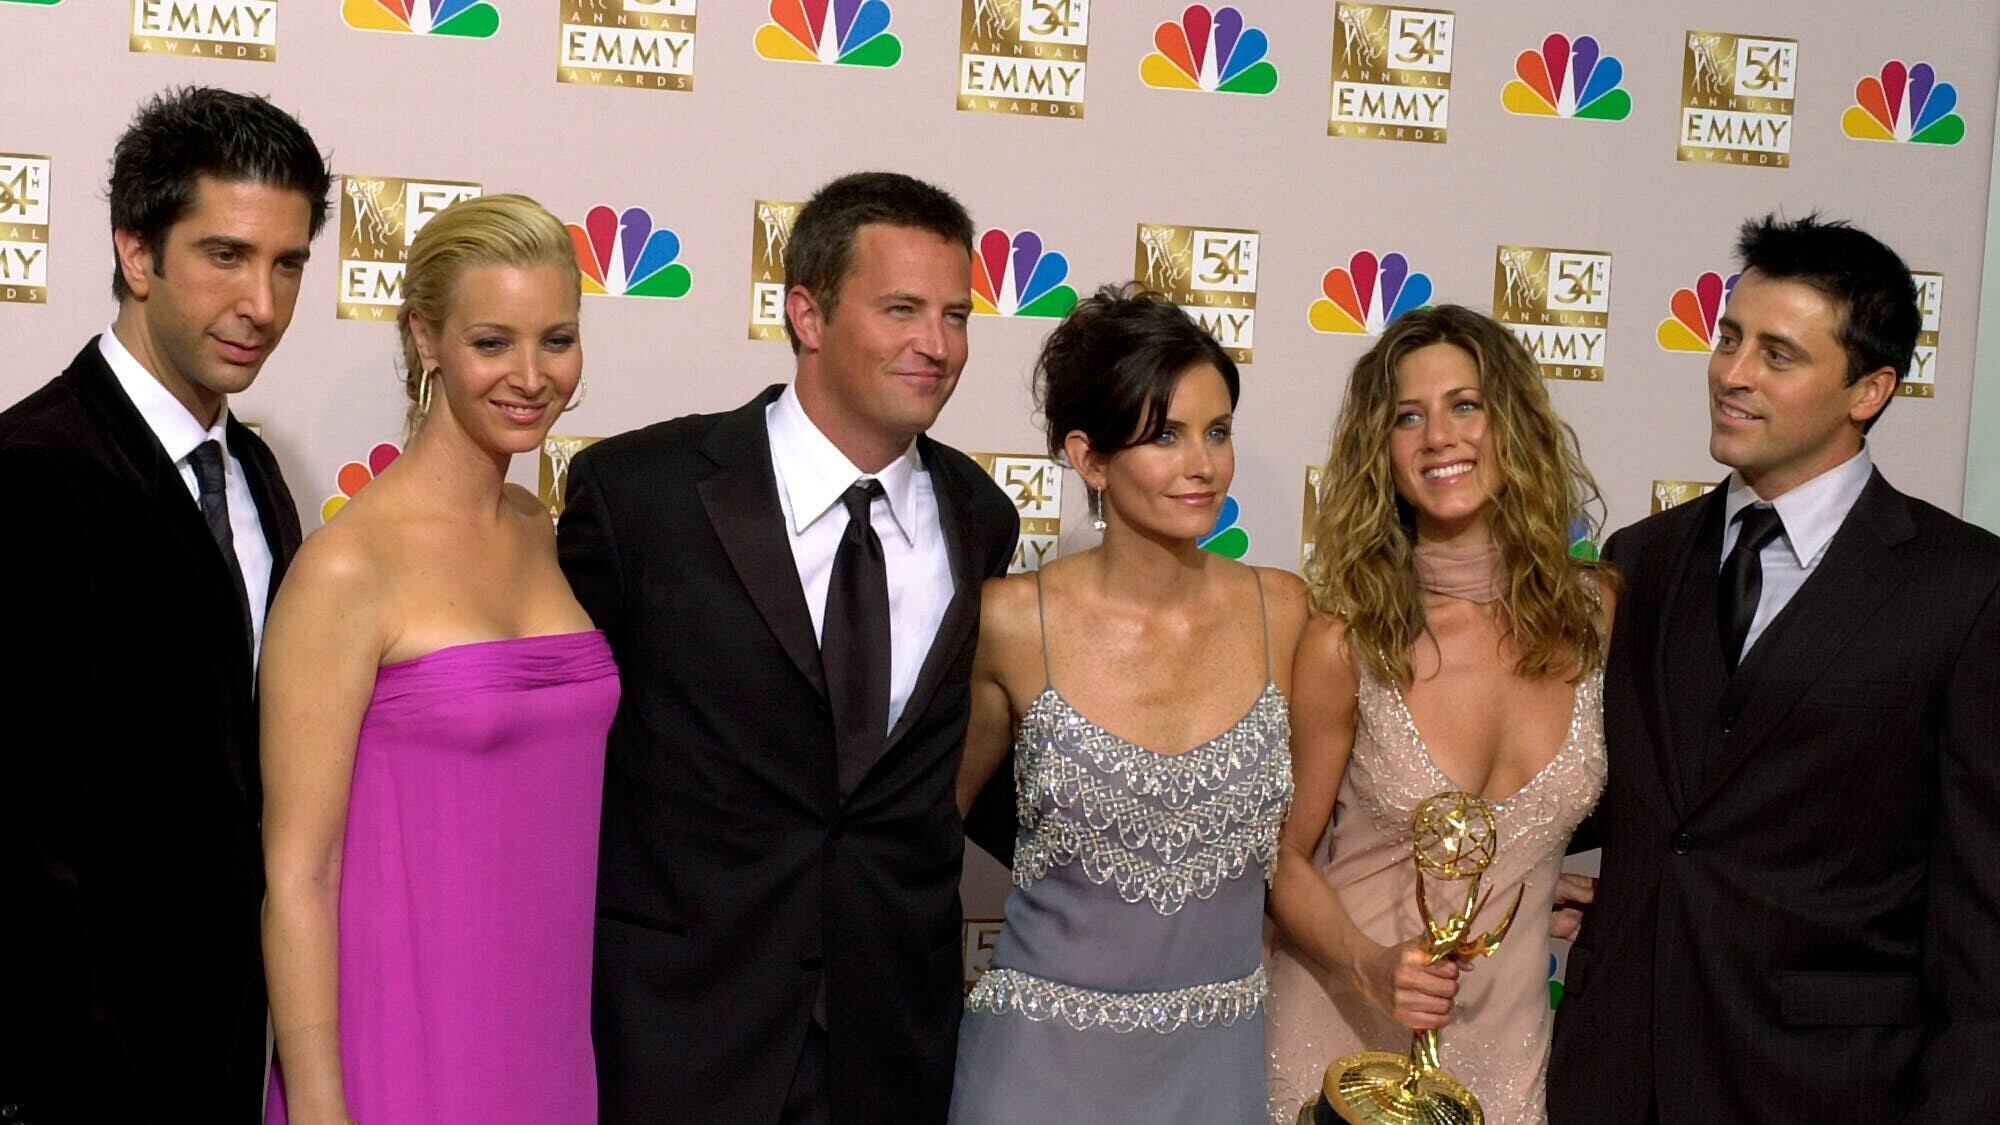 From left, David Schwimmer, Lisa Kudrow, Matthew Perry, Courteney Cox, Jennifer Aniston and Matt LeBlanc in 2002 (Reed Saxon/P)A